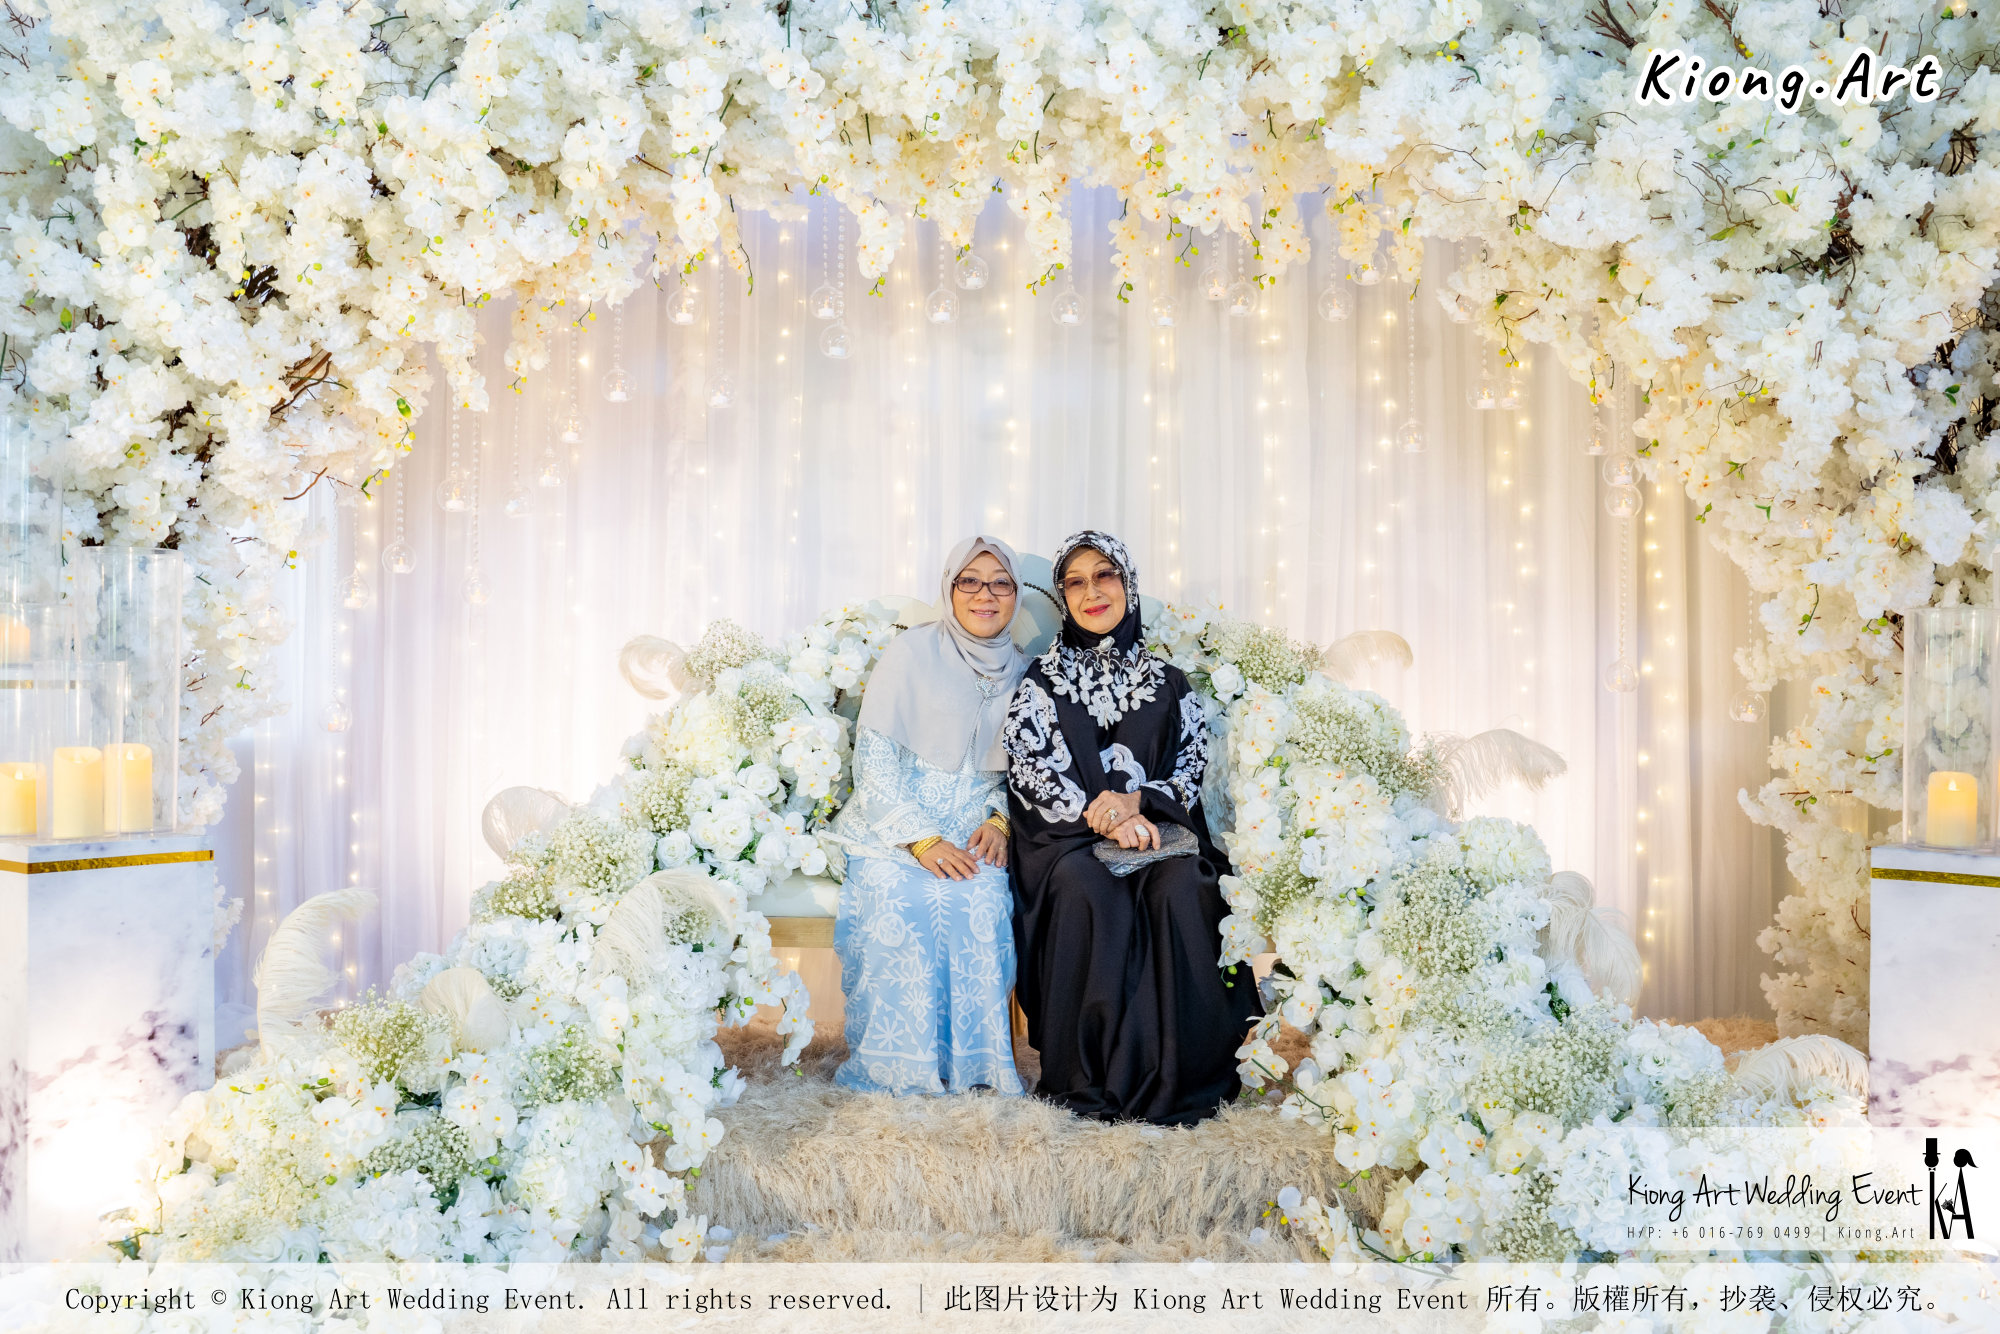 Kuala Lumpur Wedding Event Deco Wedding Planner Kiong Art Wedding Event Malay Wedding Theme Tema Perkahwinan Melayu A01-001